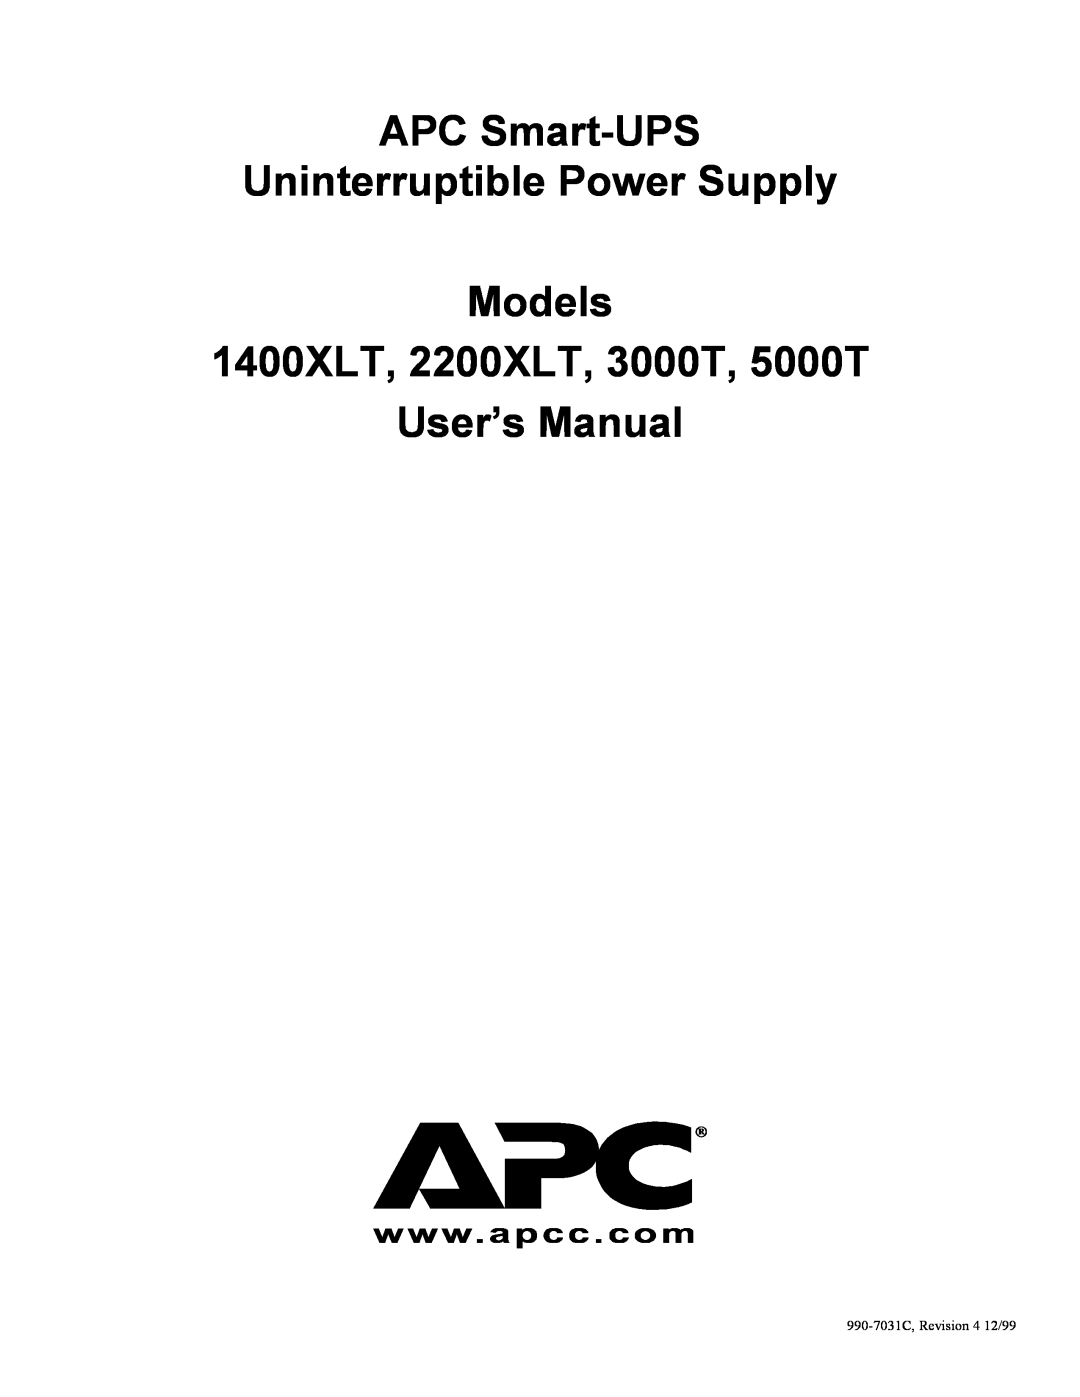 American Power Conversion 2200XLT, 5000T, 3000T, 1400XLT user manual APC Smart-UPS Uninterruptible Power Supply Models 